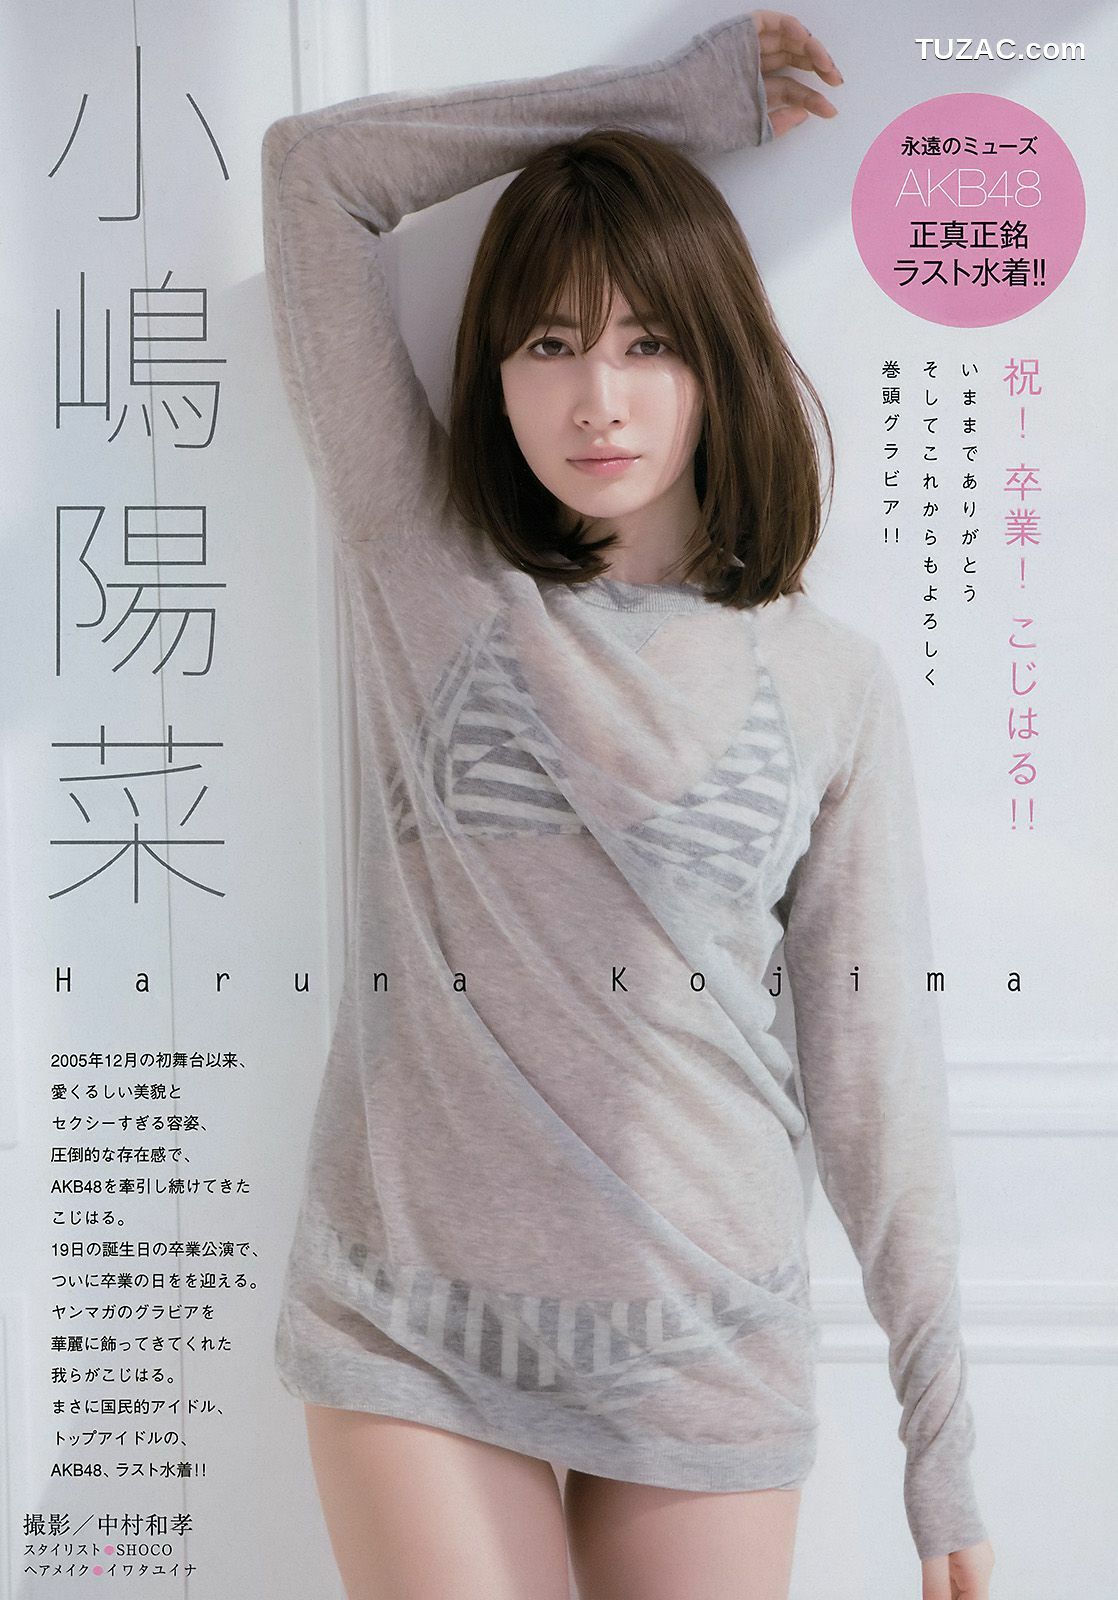 Young Magazine杂志写真_ 小嶋陽菜 ユミ・W・クライン 2017年No.20 写真杂志[12P]